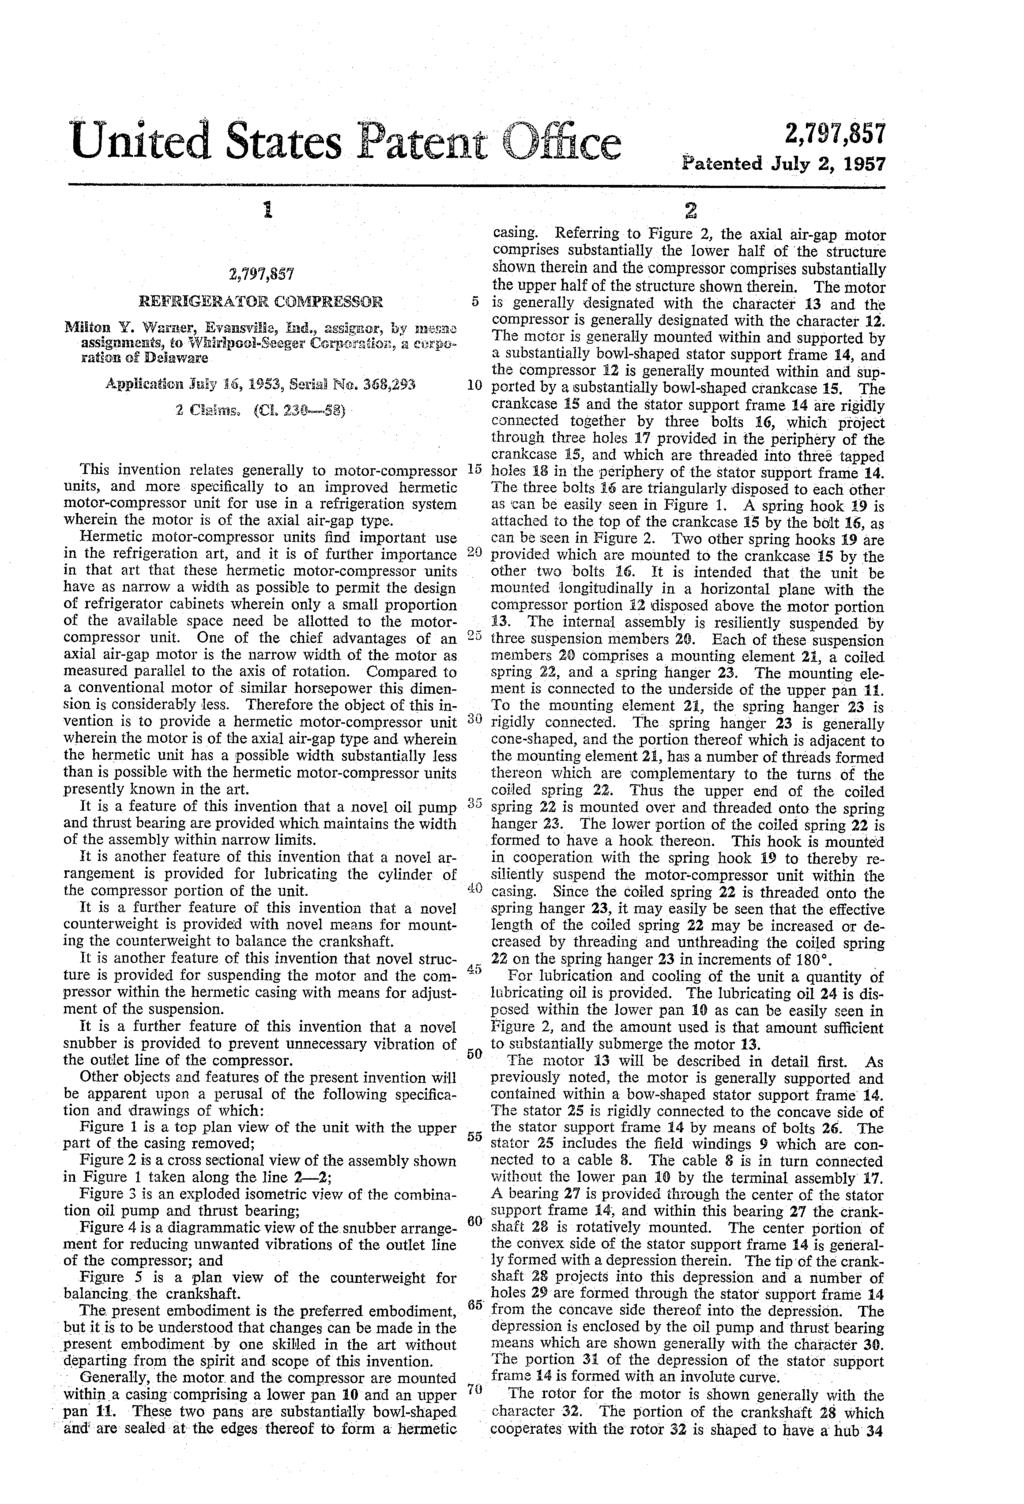 United States Patent Office REFERGERATOR (CMEPRESSR Militon Y. Warrier, Evansvilia, Ed.